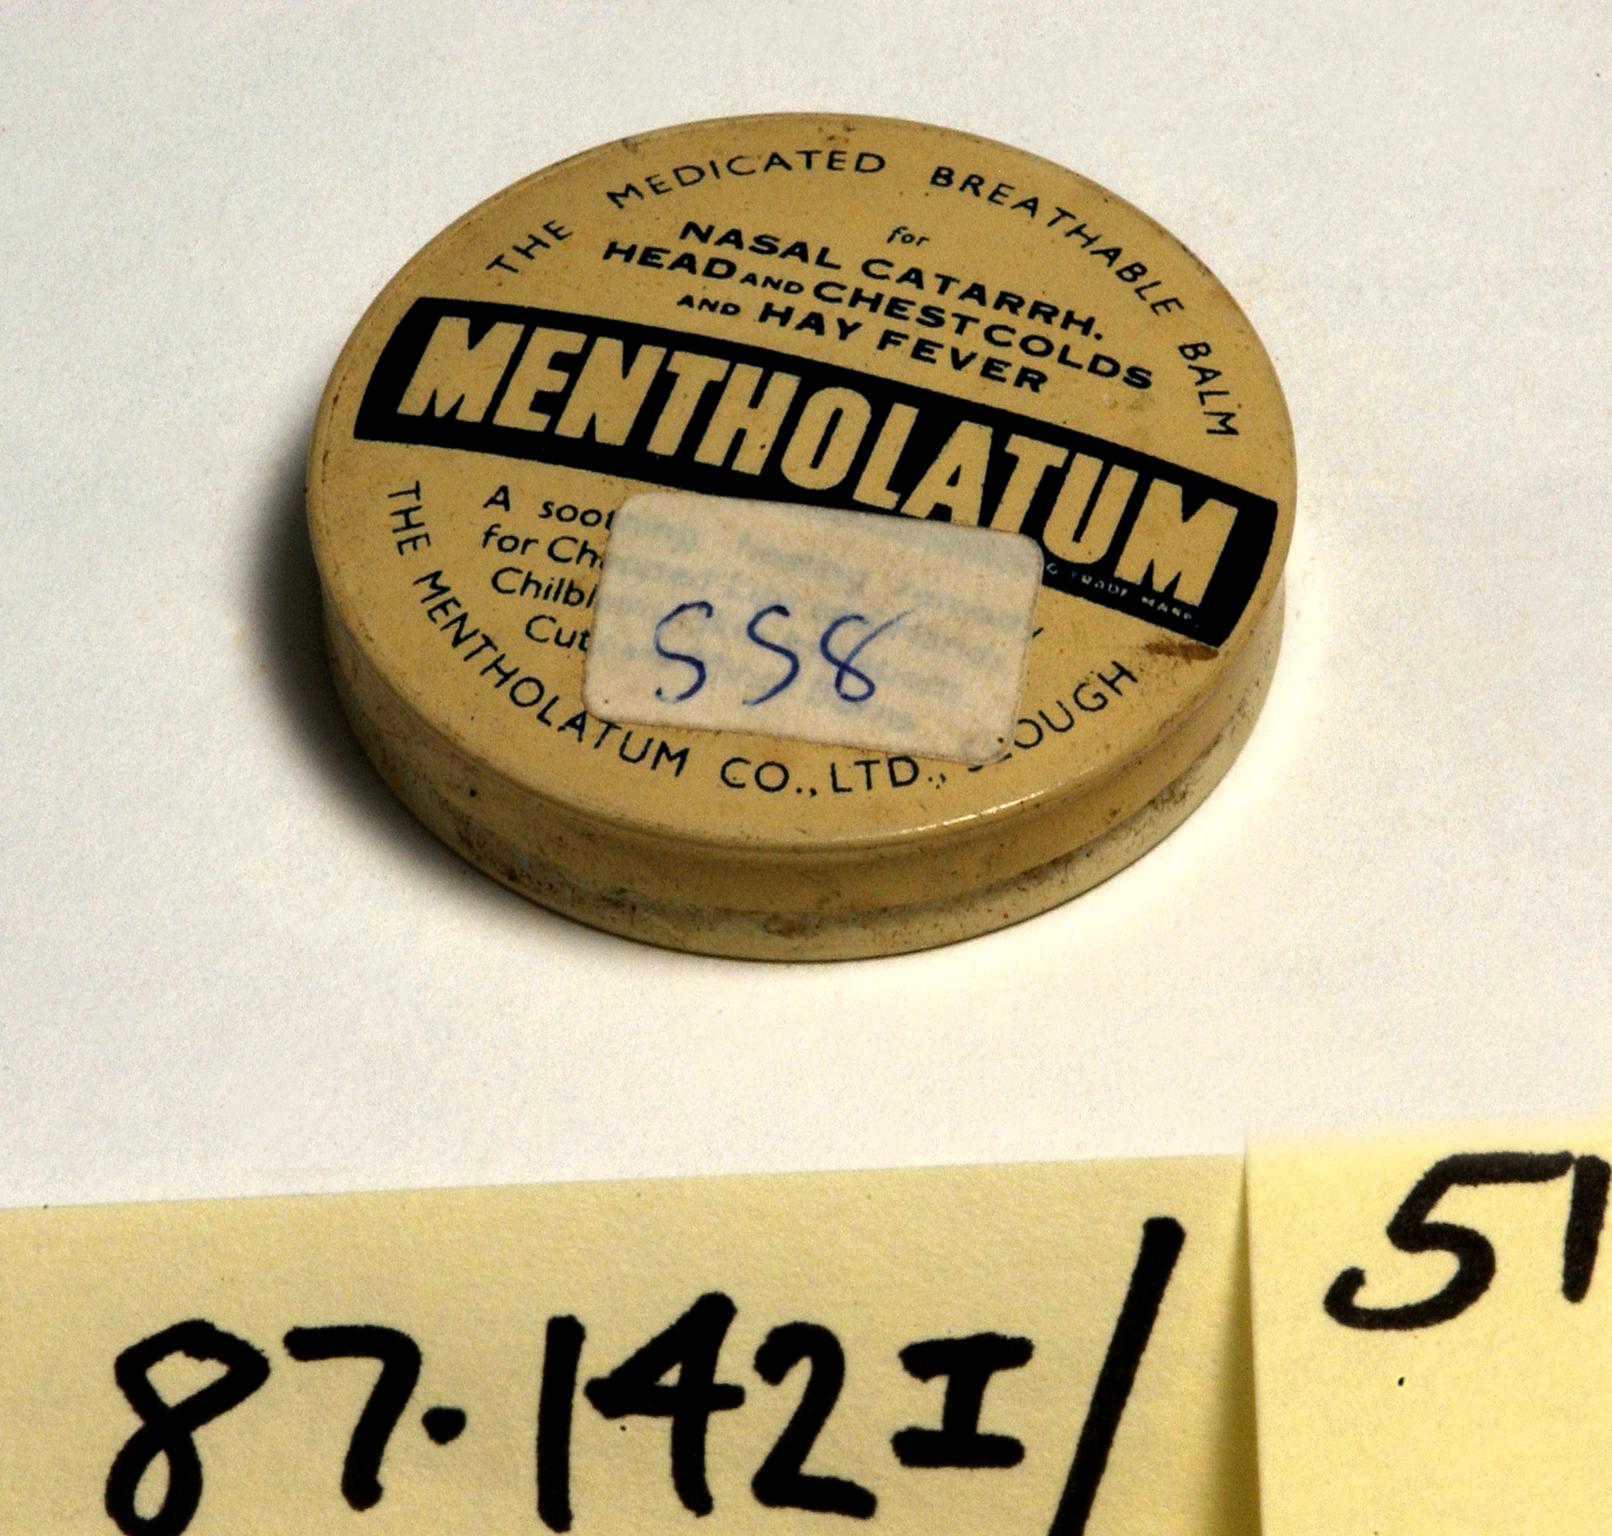 Medication tin